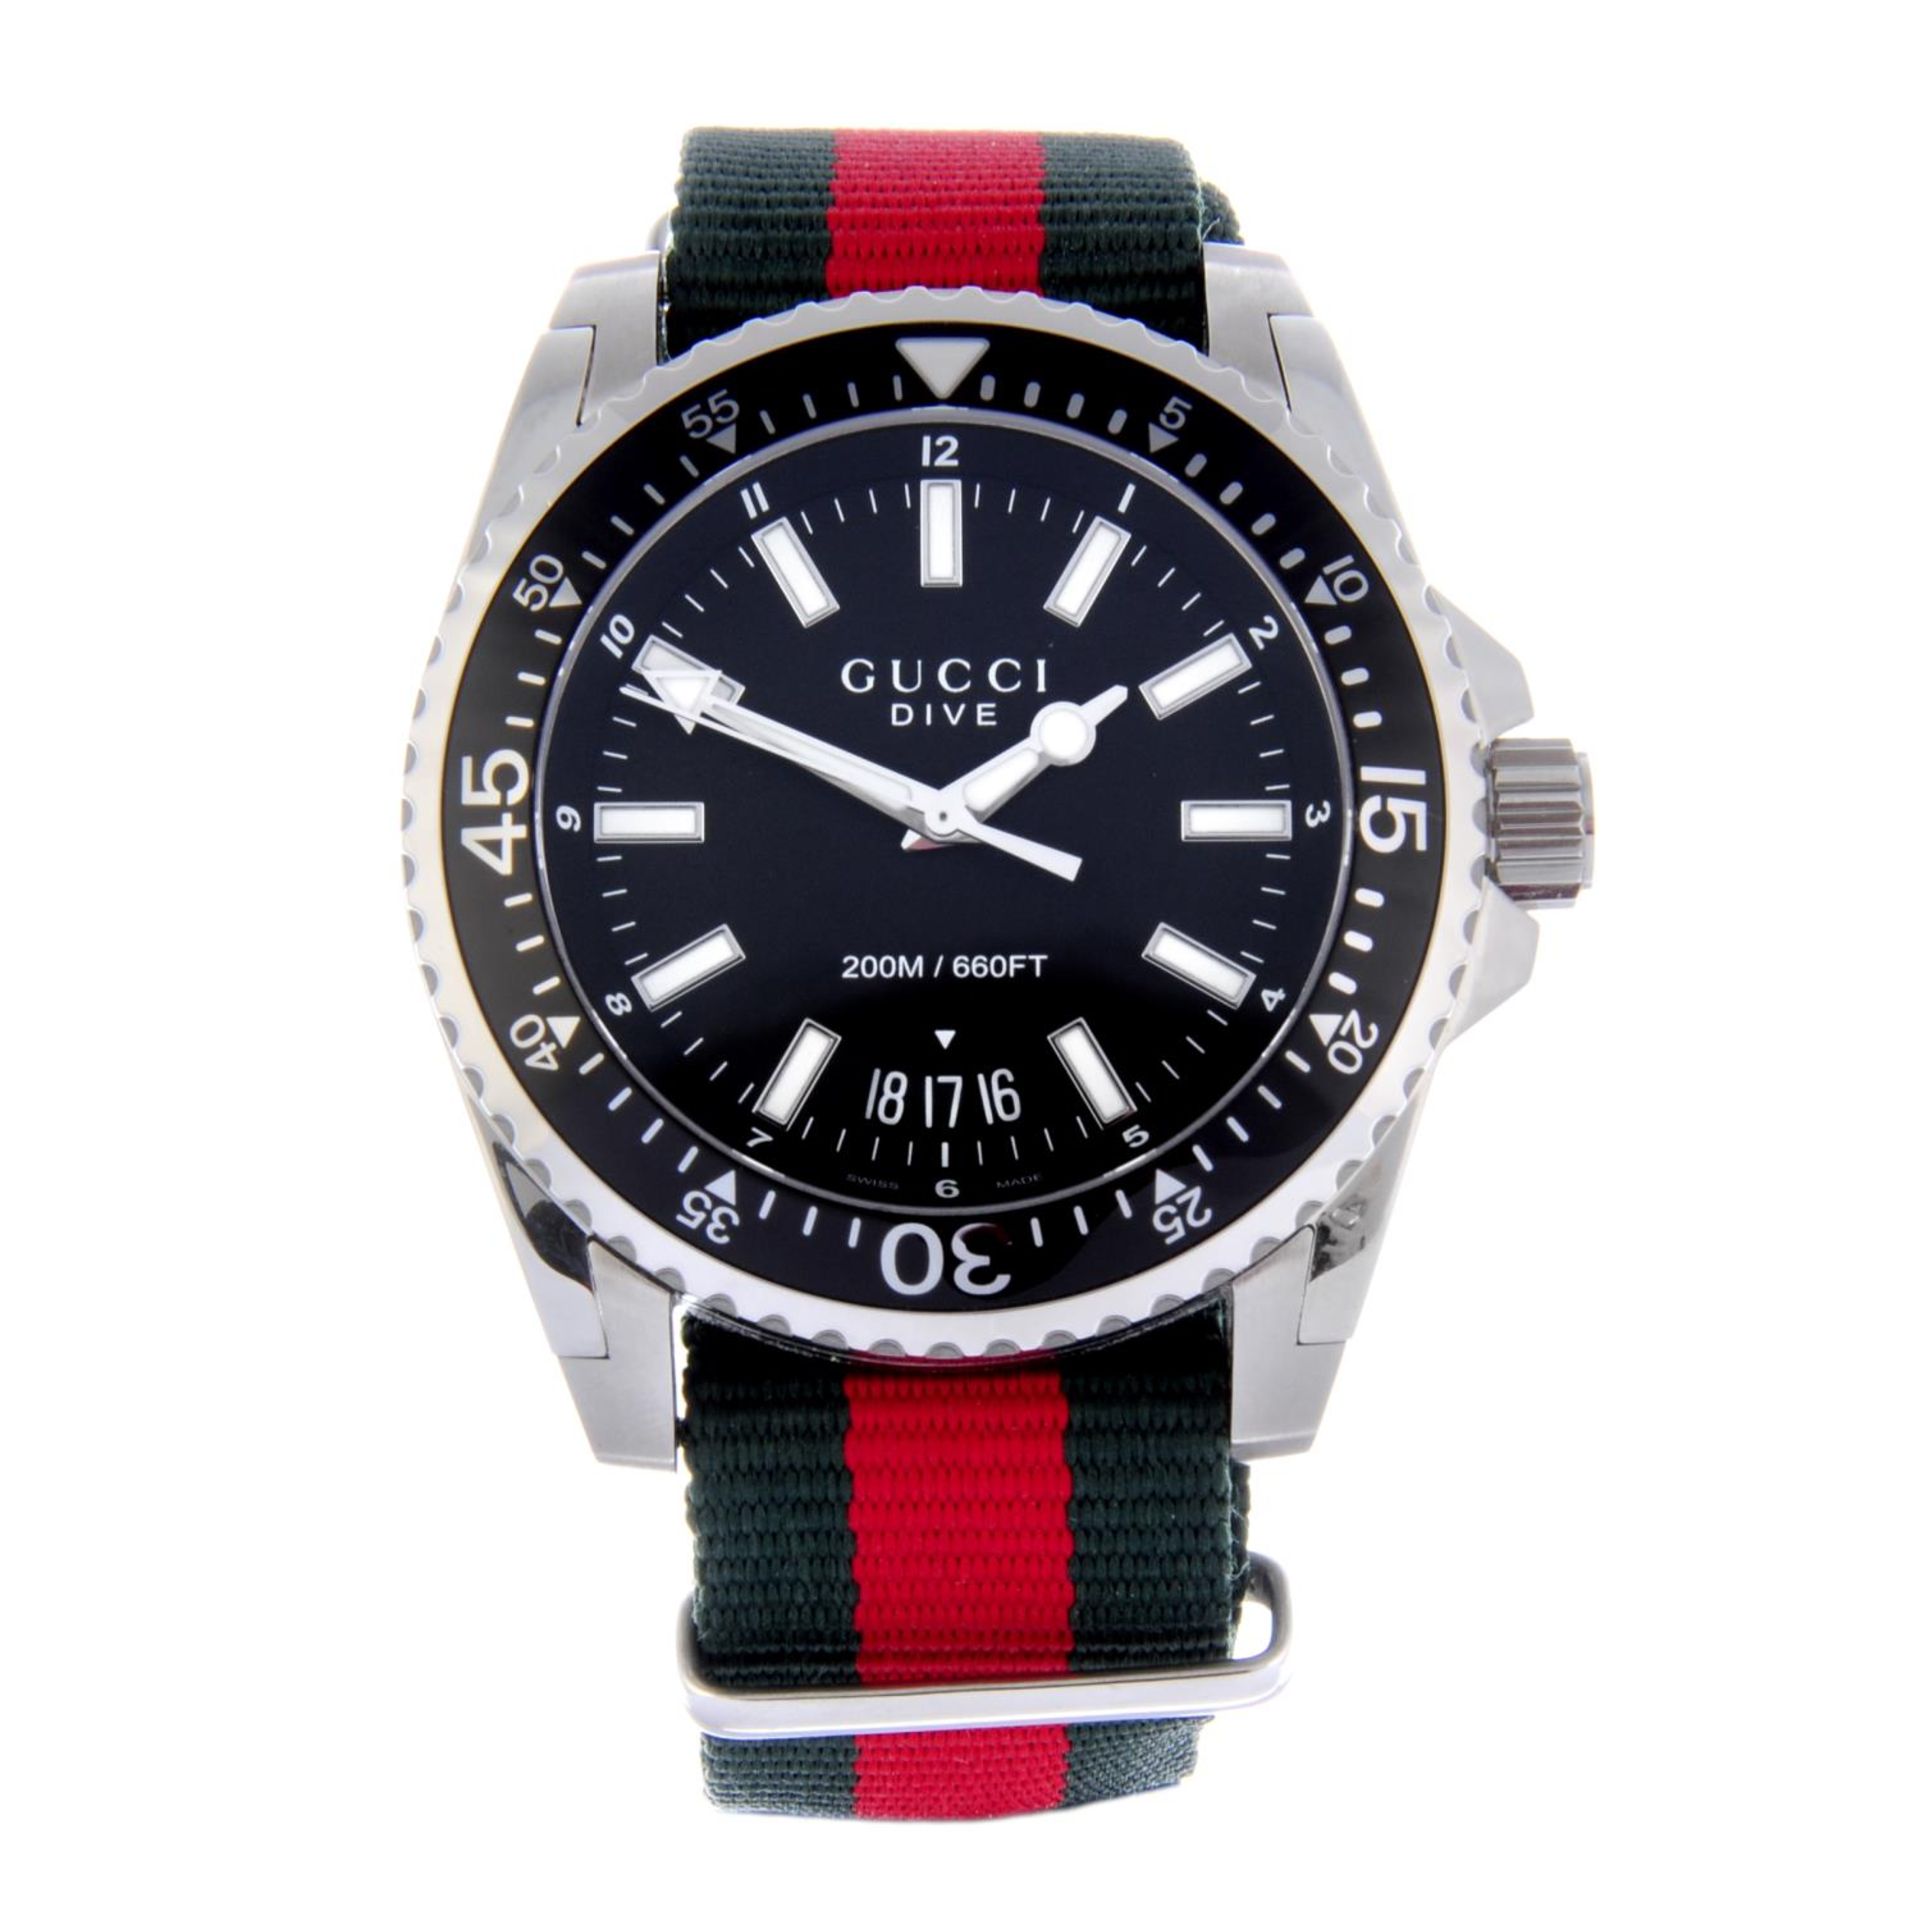 GUCCI - a gentleman's Dive wrist watch.